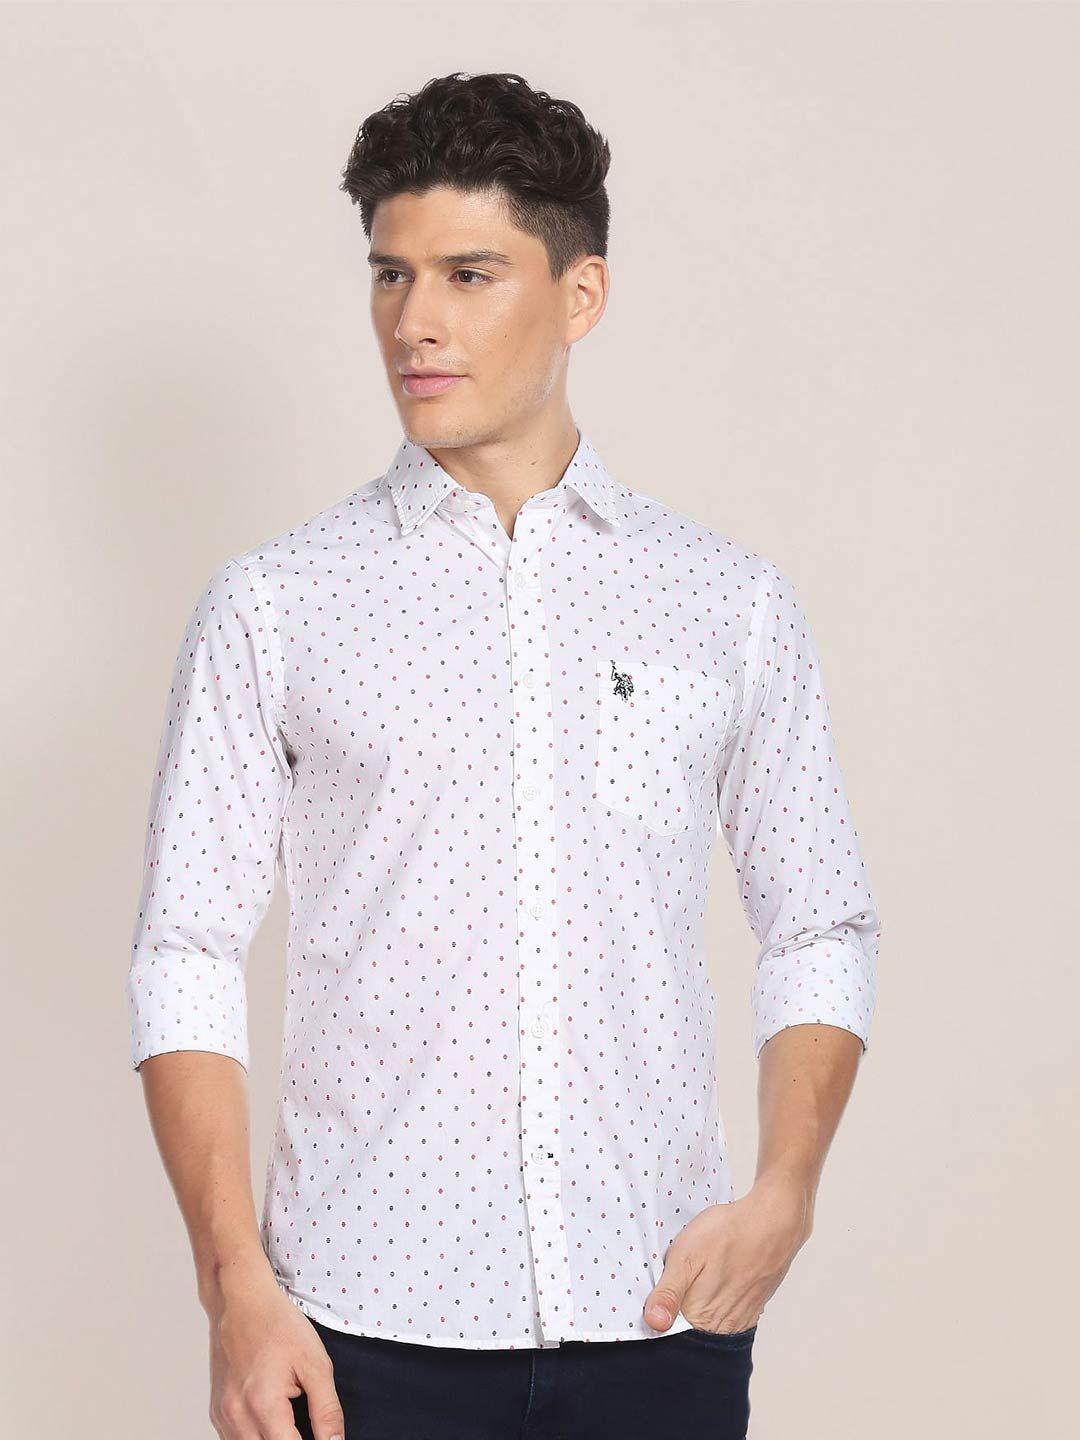 u.s. polo assn. geometric printed pure cotton casual shirt